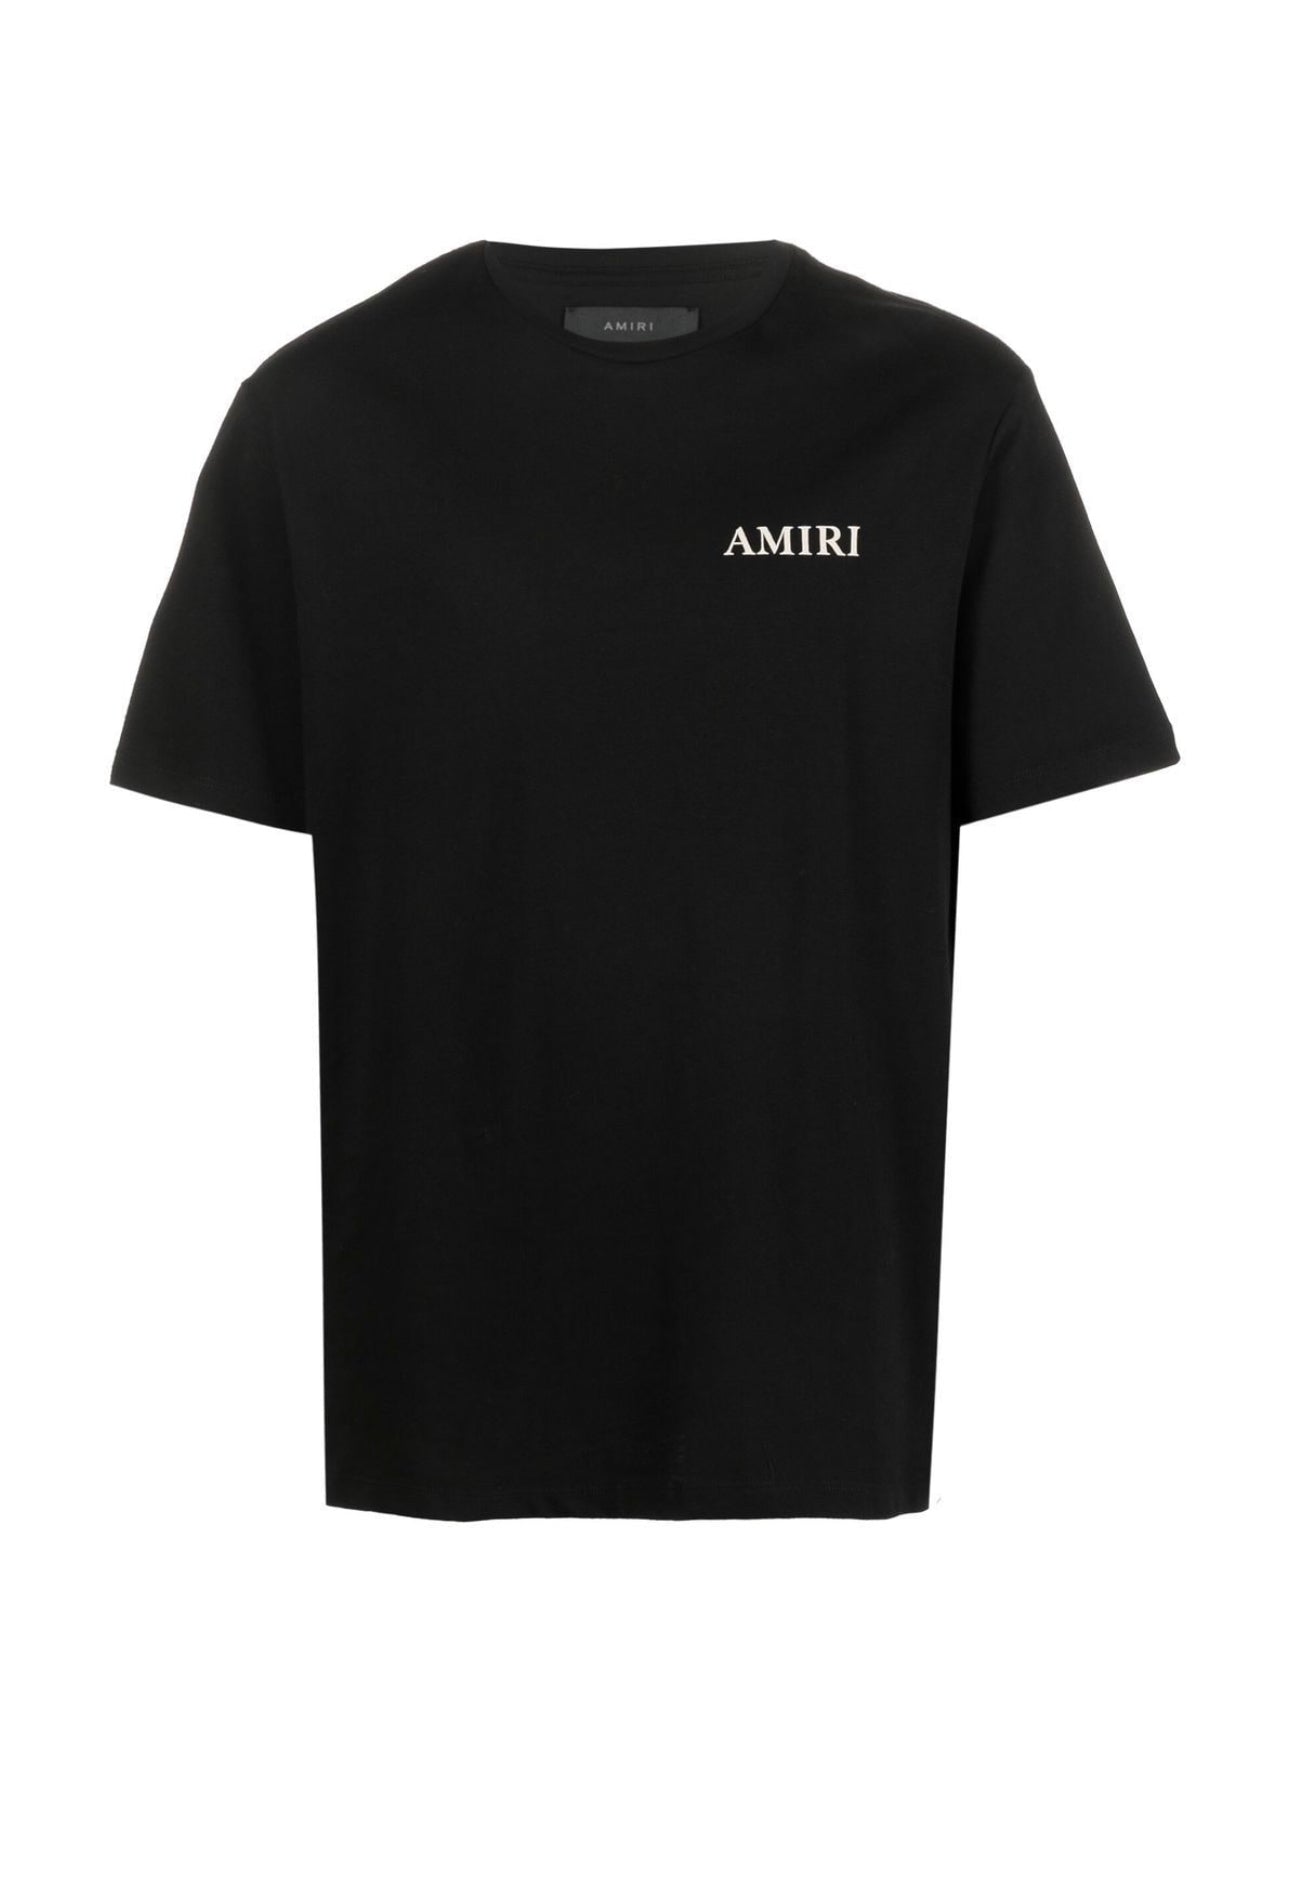 Amiri T-Shirt Black